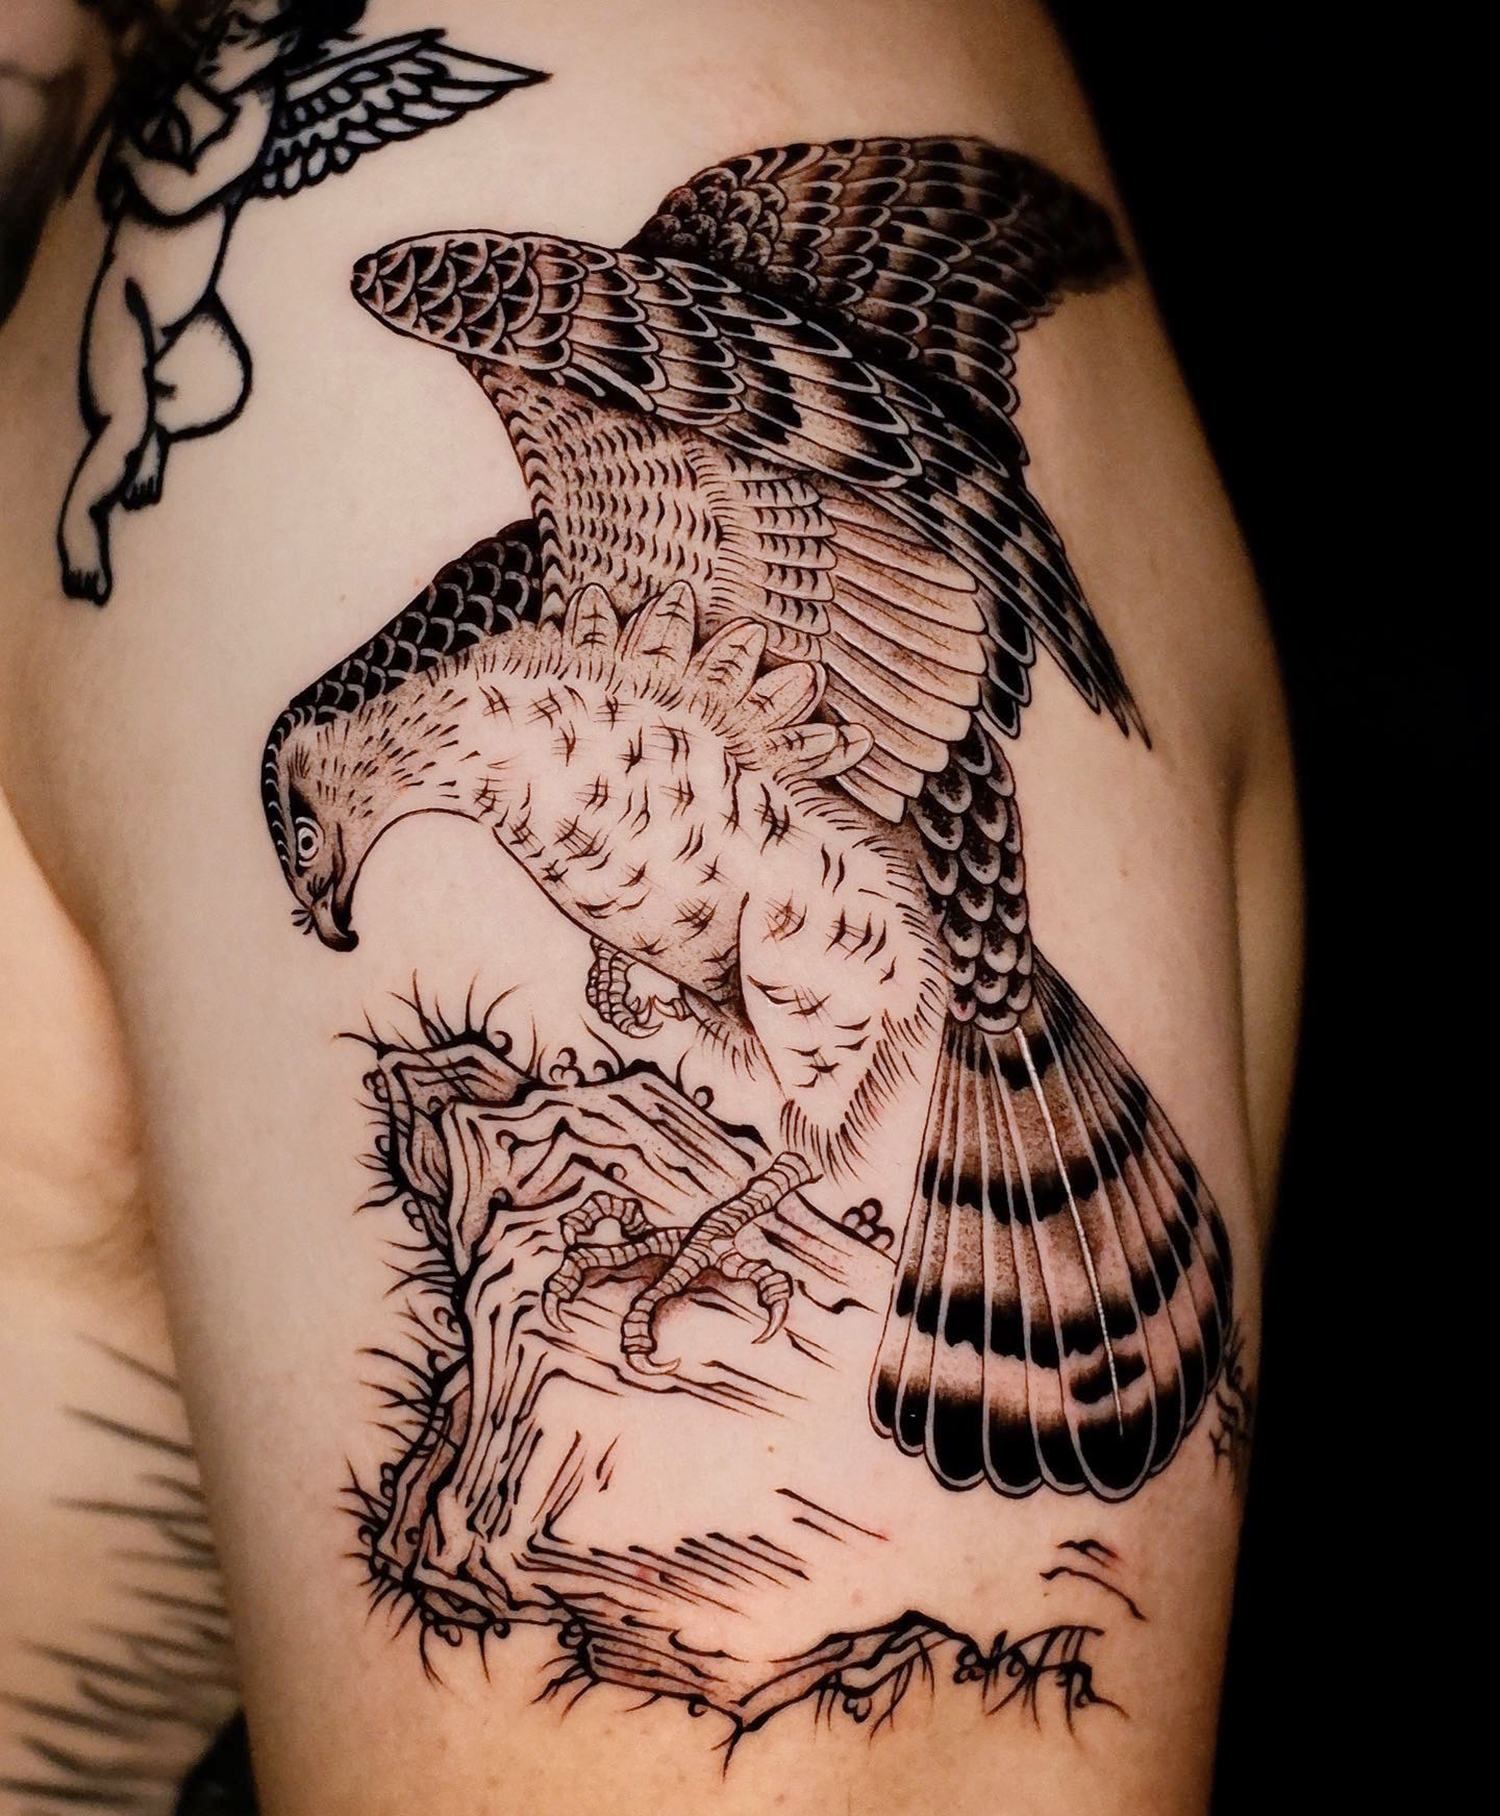 engraving like eagle tattoo on arm